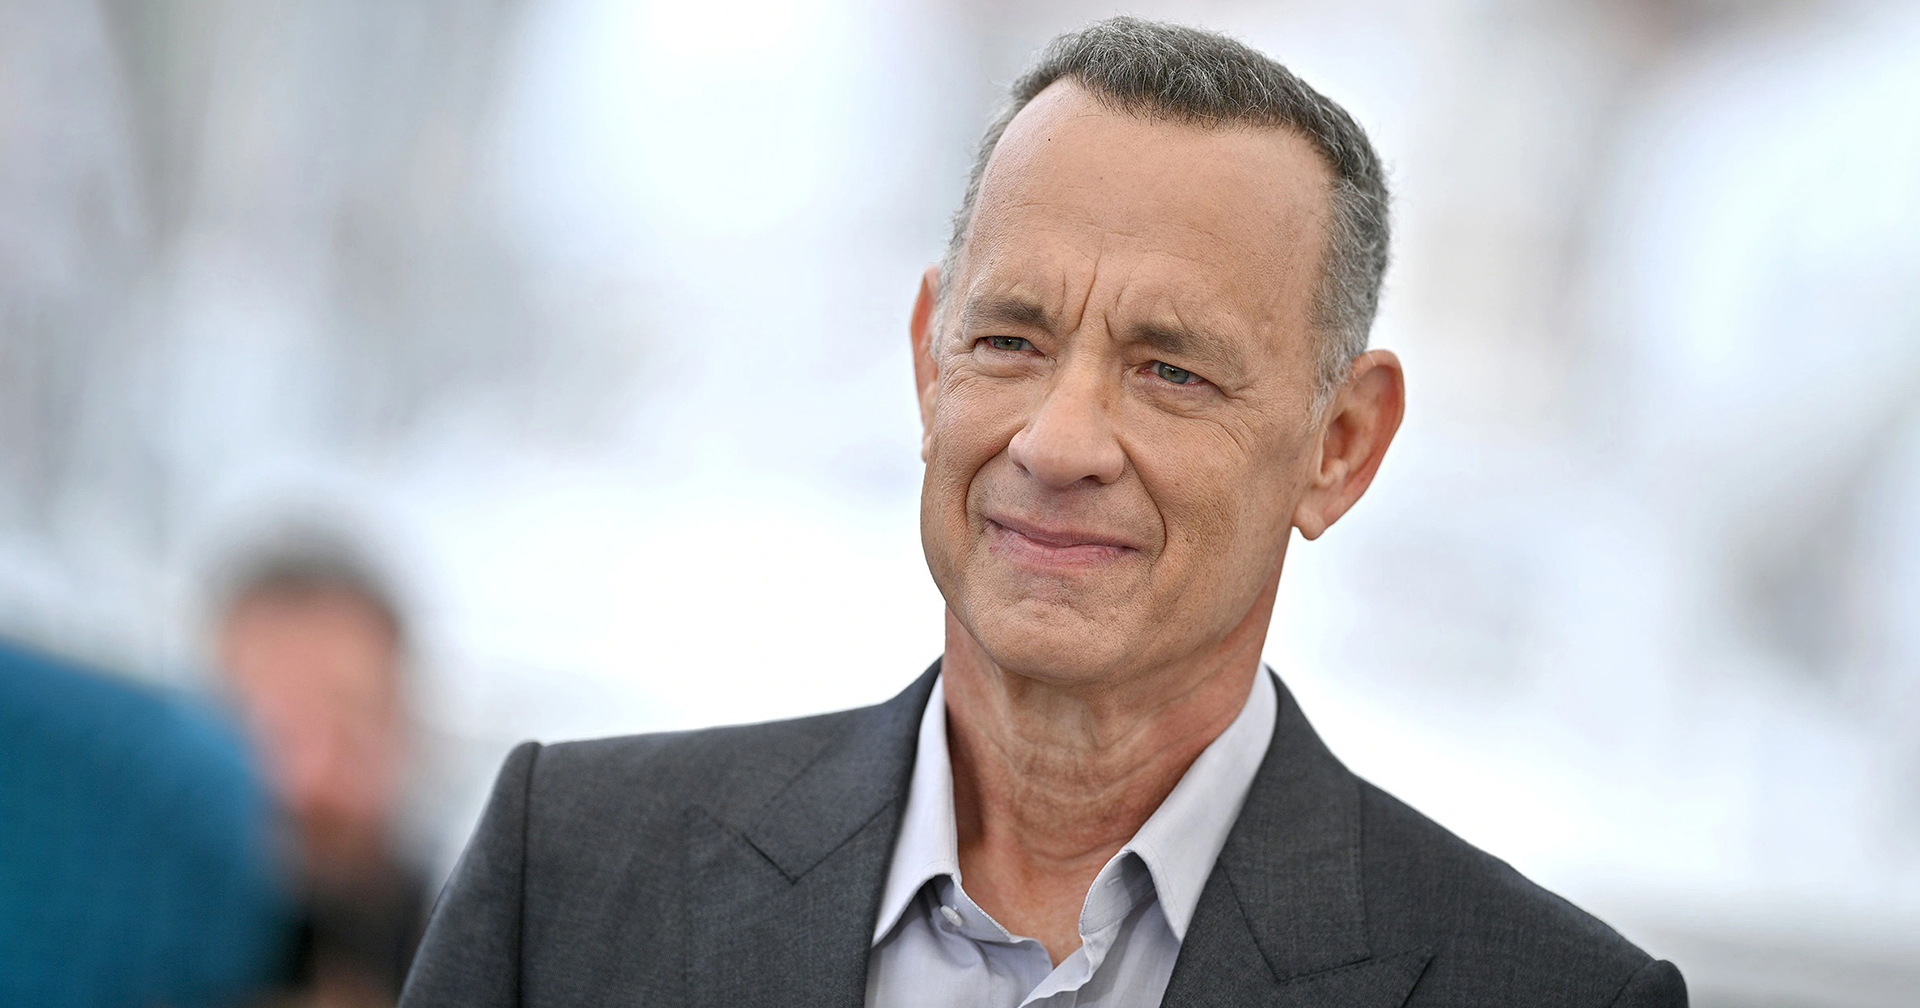 Tom Hanks ไม่ชอบดูหนังที่ตัวเองแสดง เพราะไม่อยากประสาทกินกับความปลอมและข้อผิดพลาดในหนัง